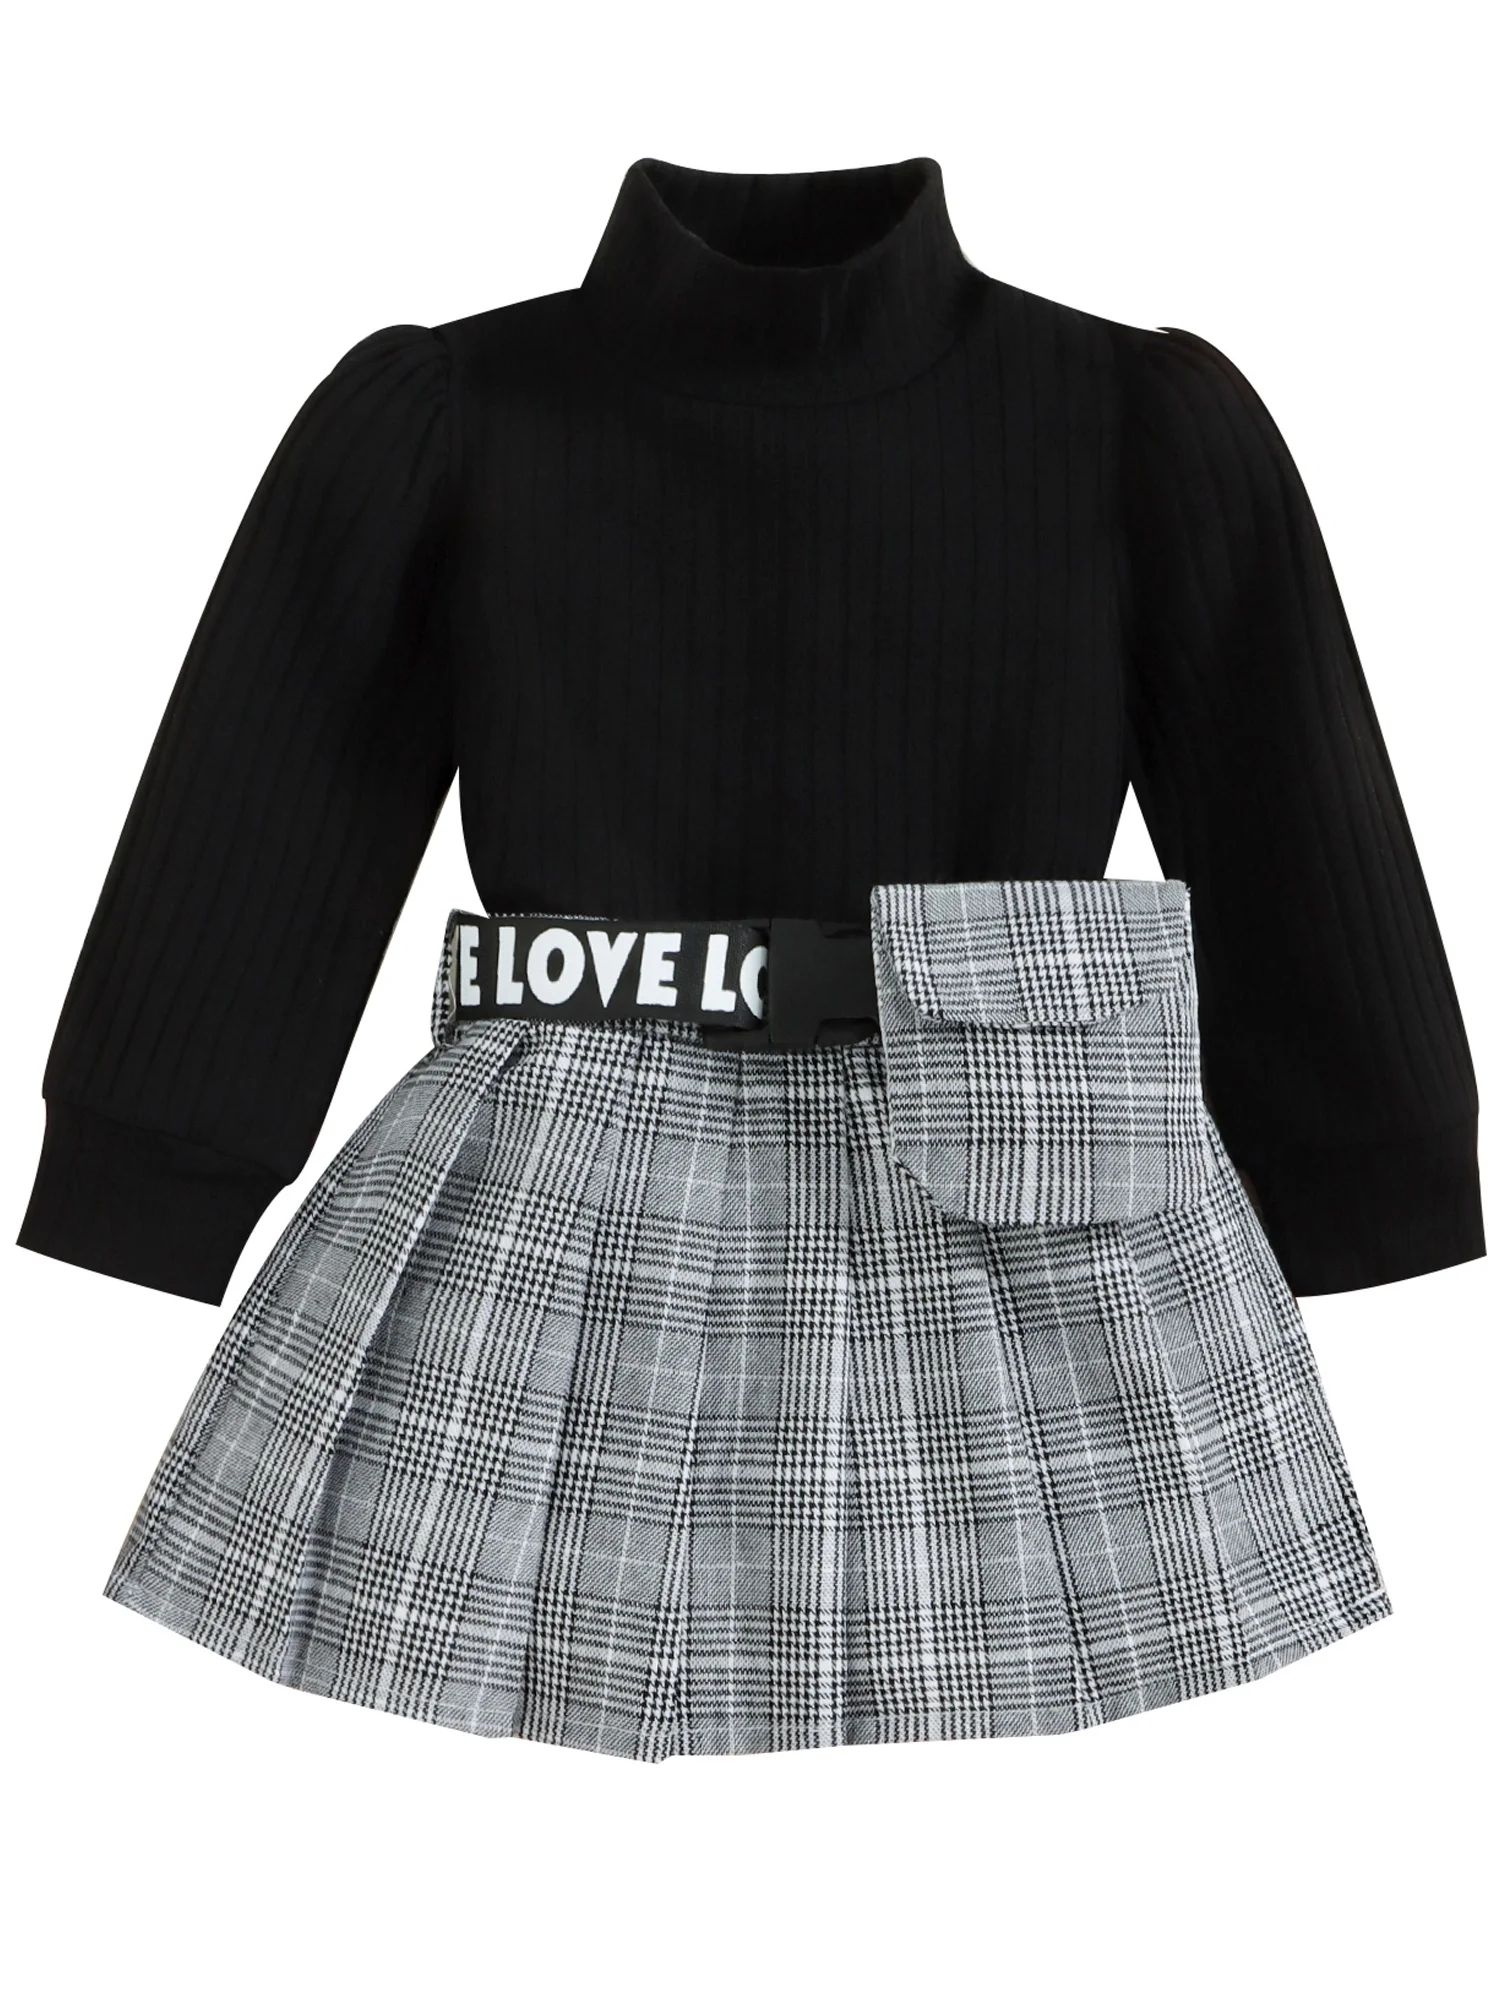 Musuos Baby Girl Turtleneck Ribbed Long Sleeve Sweater Tops Plaid Skirt with Belt Bag | Walmart (US)